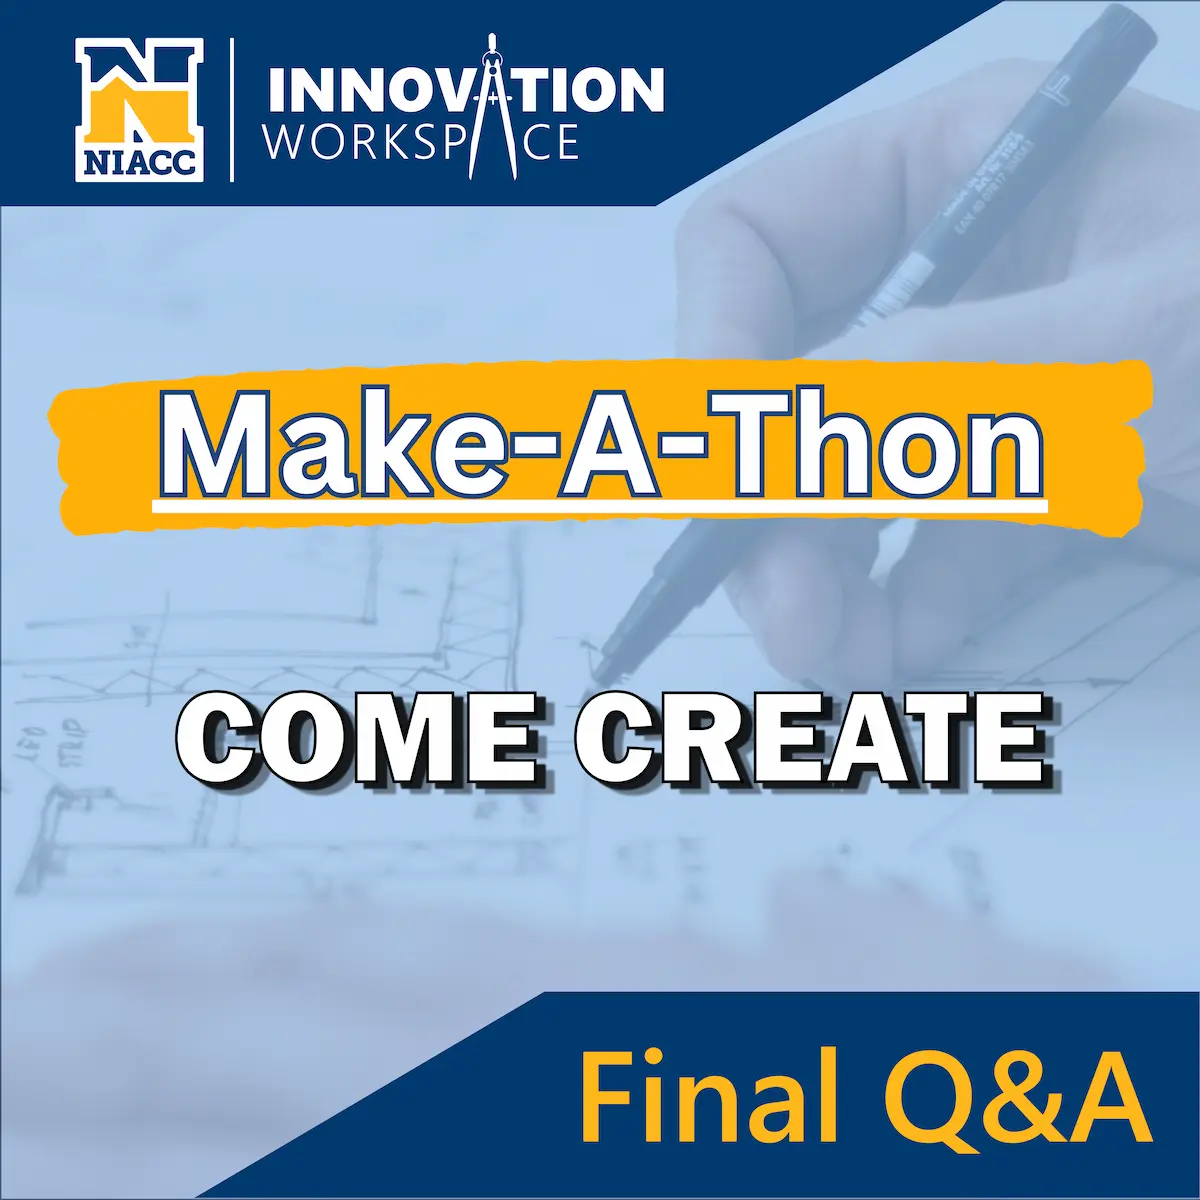 Make-A-Thon Final Q&A